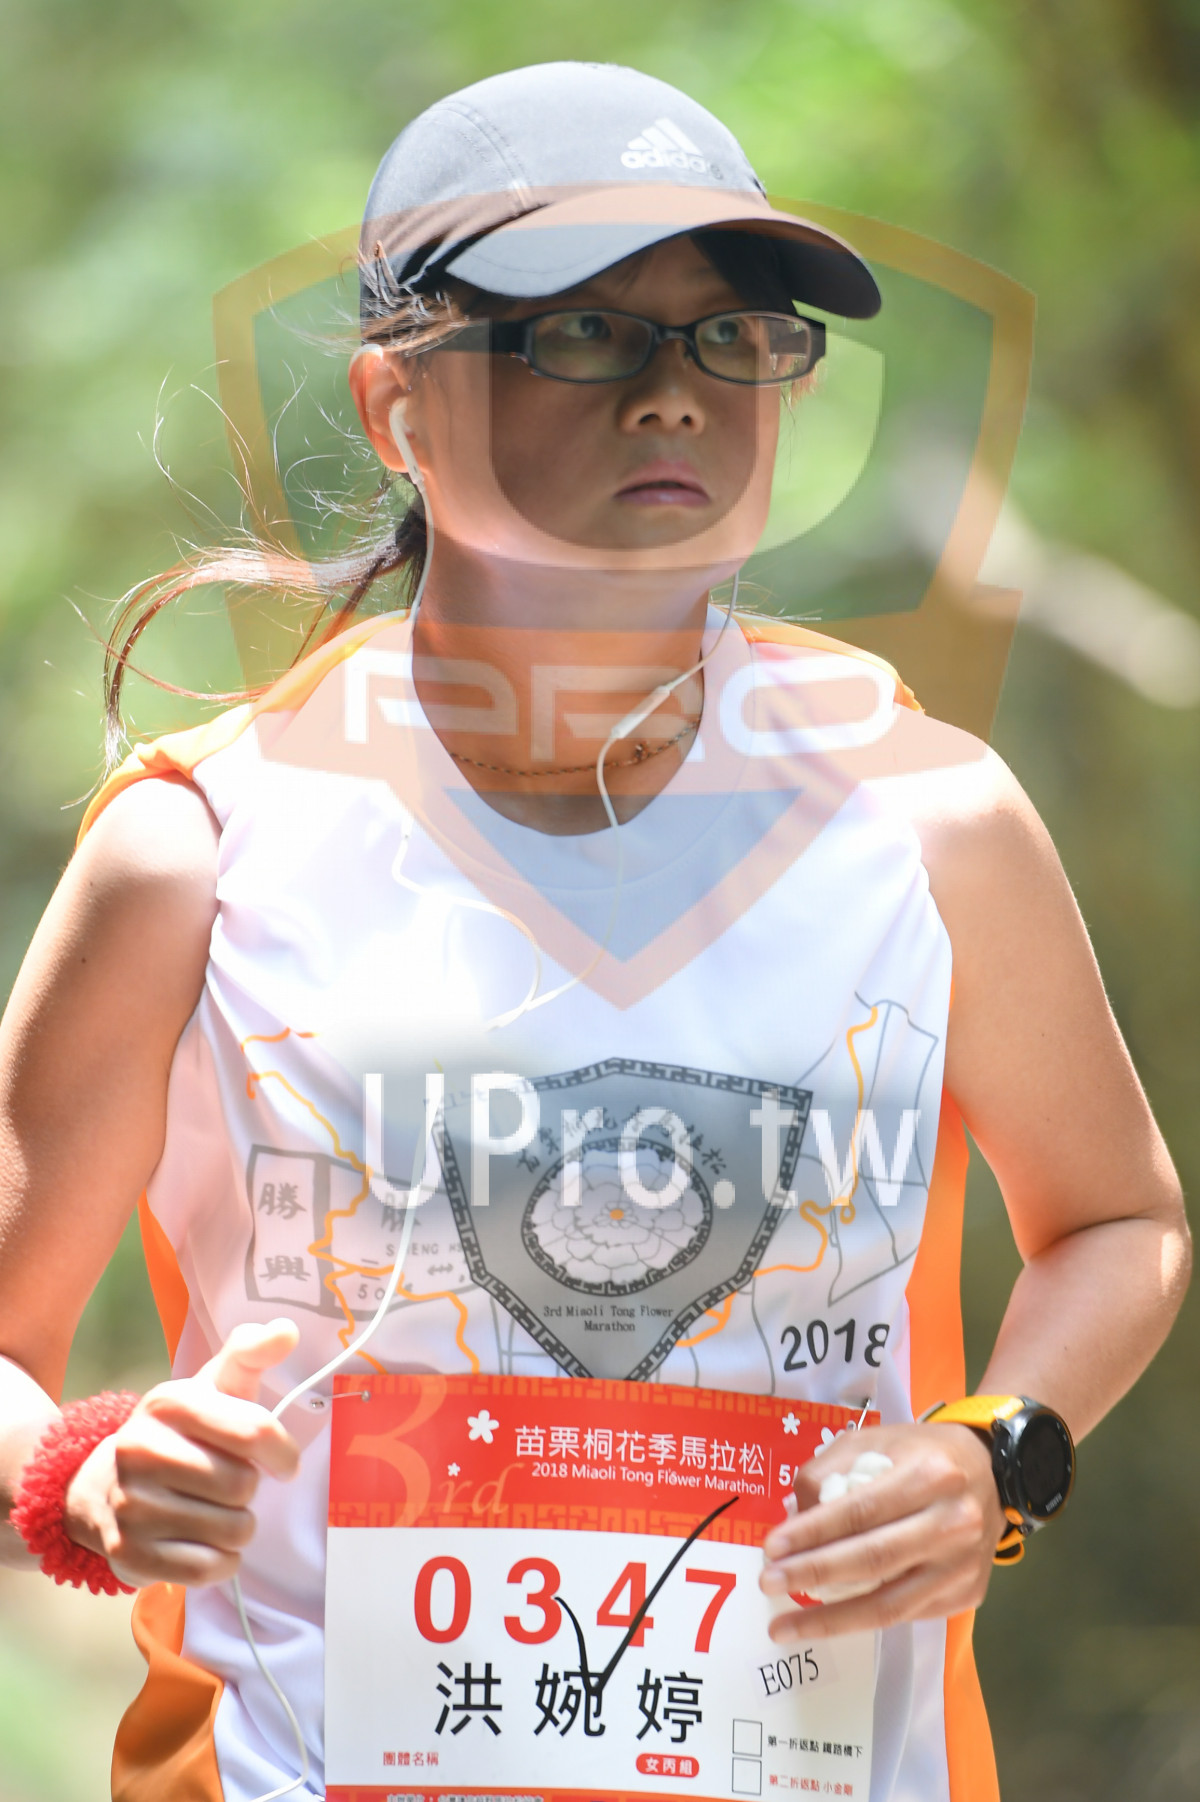 A,3rd Misoli Tong Flover,Marathon,2018,*15,2018 Miaoli Tong Flöwer Marathon,0 347, ES,,,,|綠色隧道5|中年人